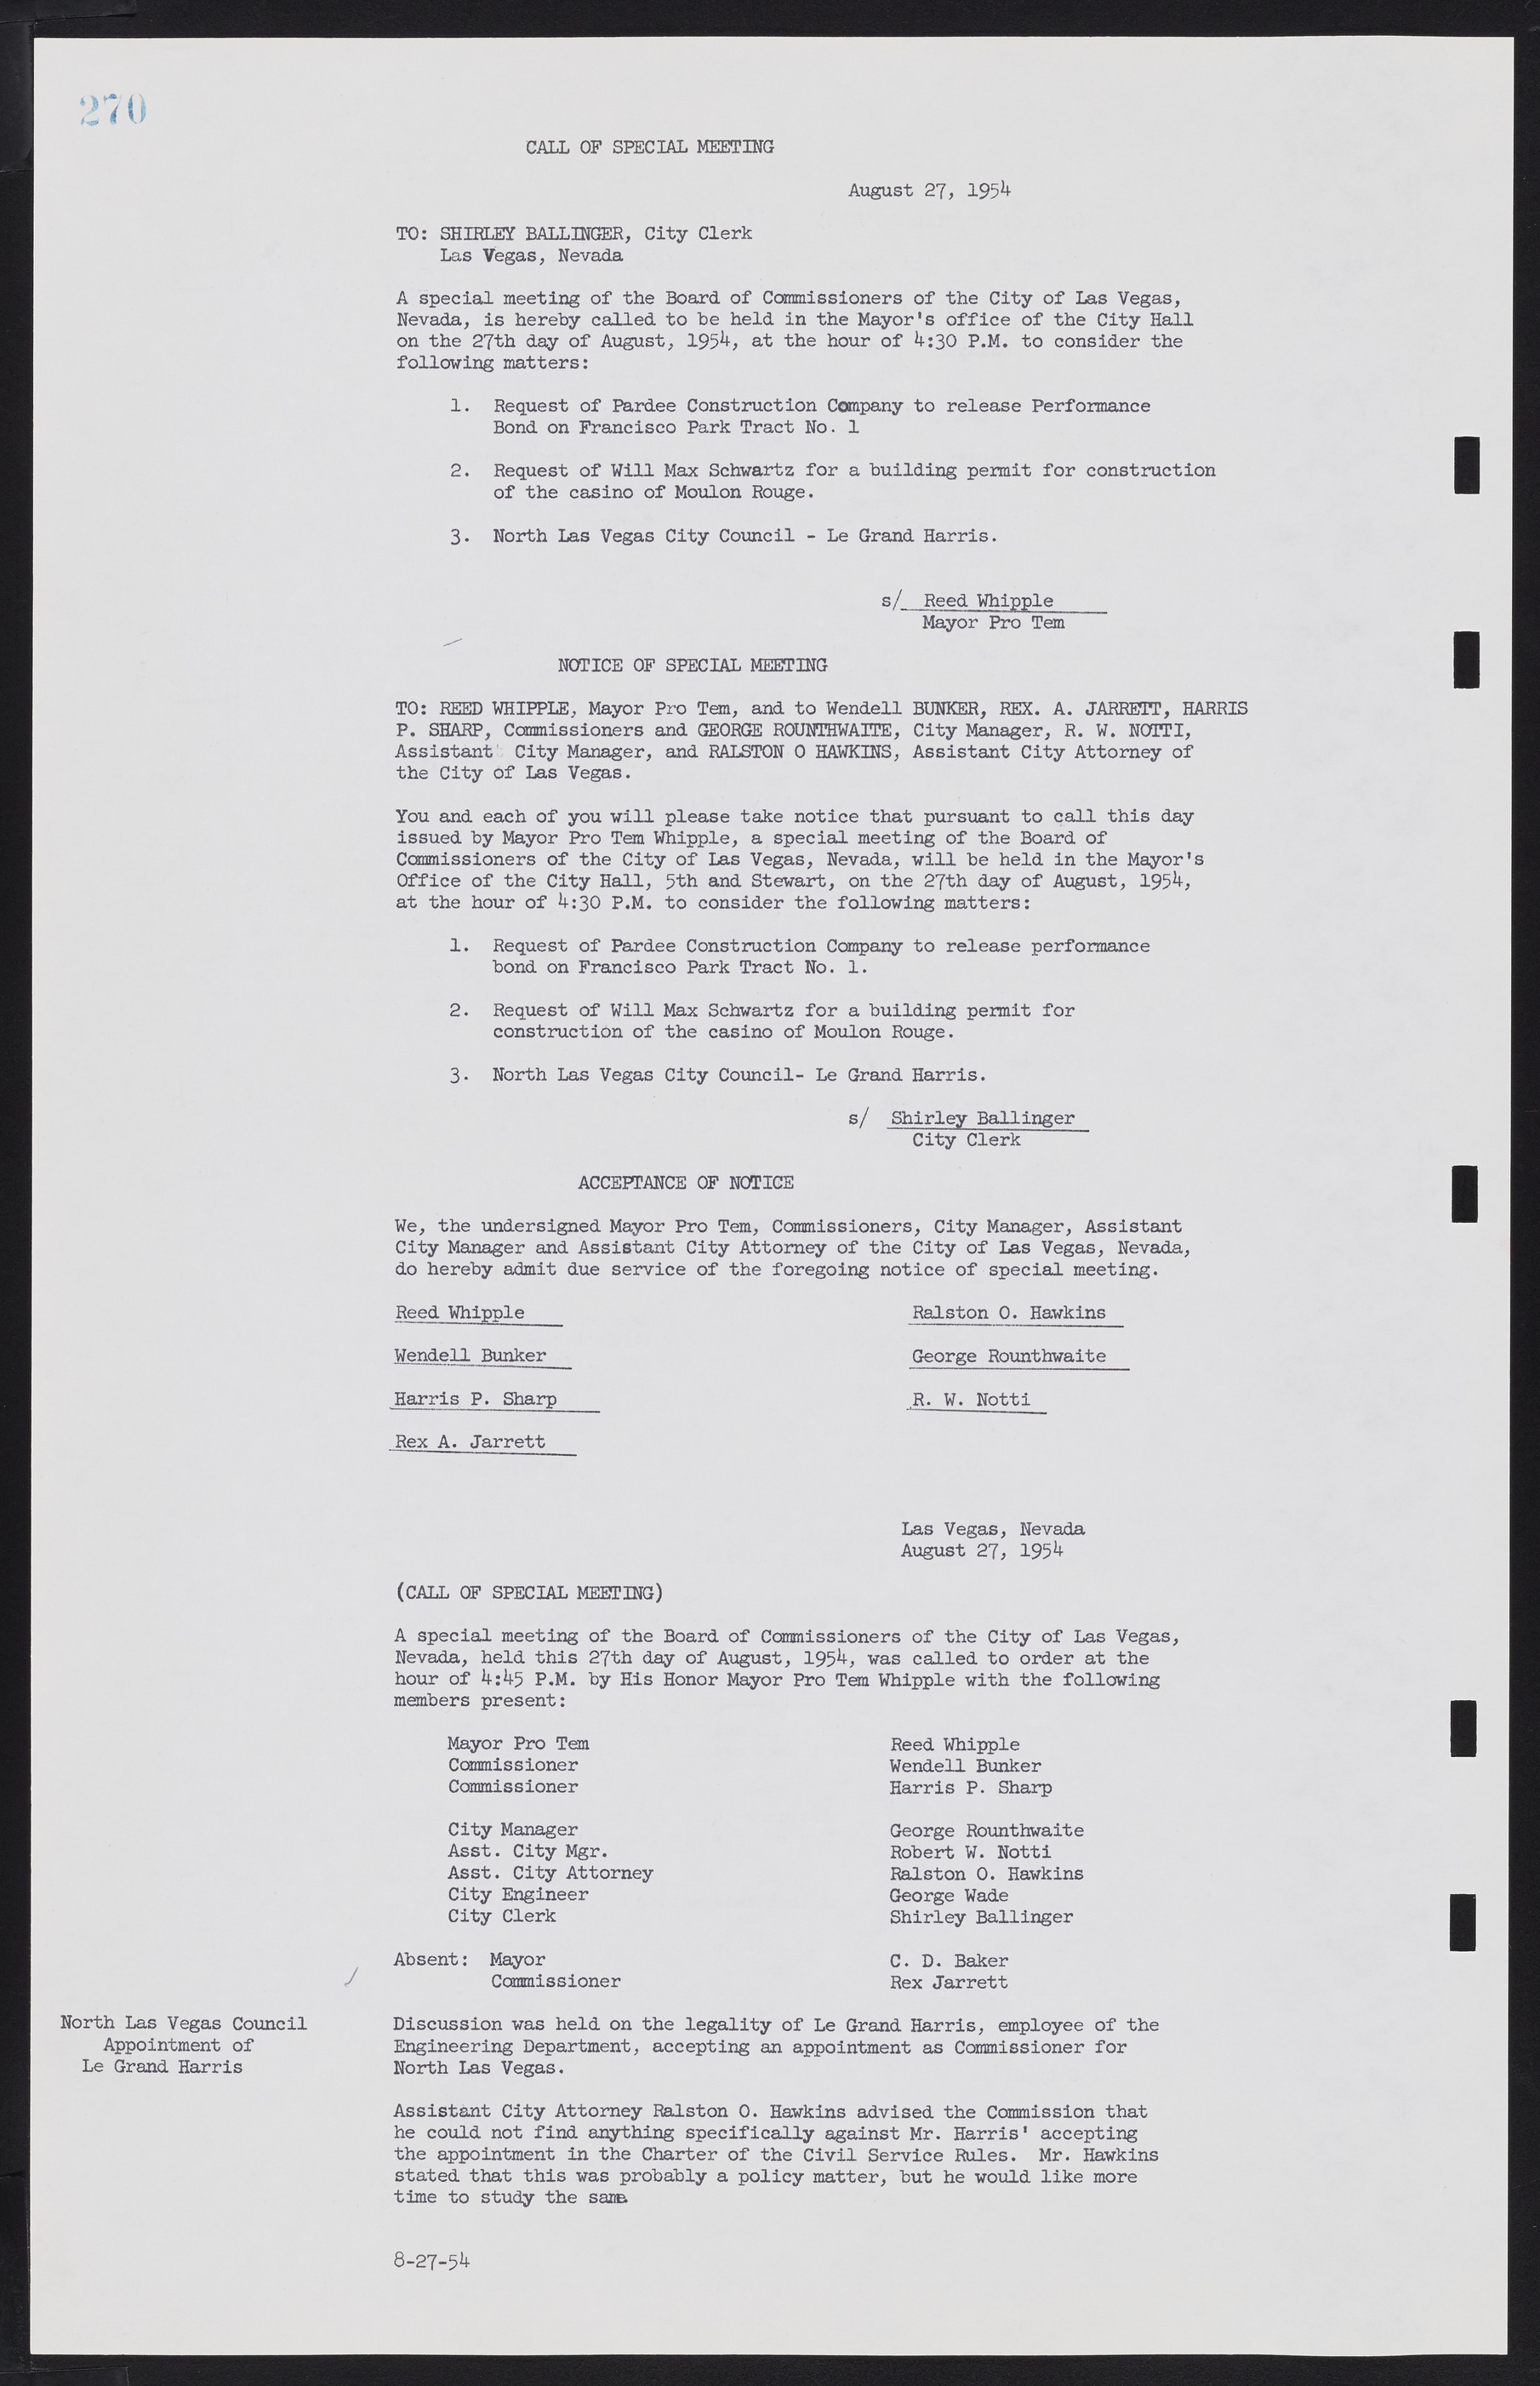 Las Vegas City Commission Minutes, February 17, 1954 to September 21, 1955, lvc000009-276